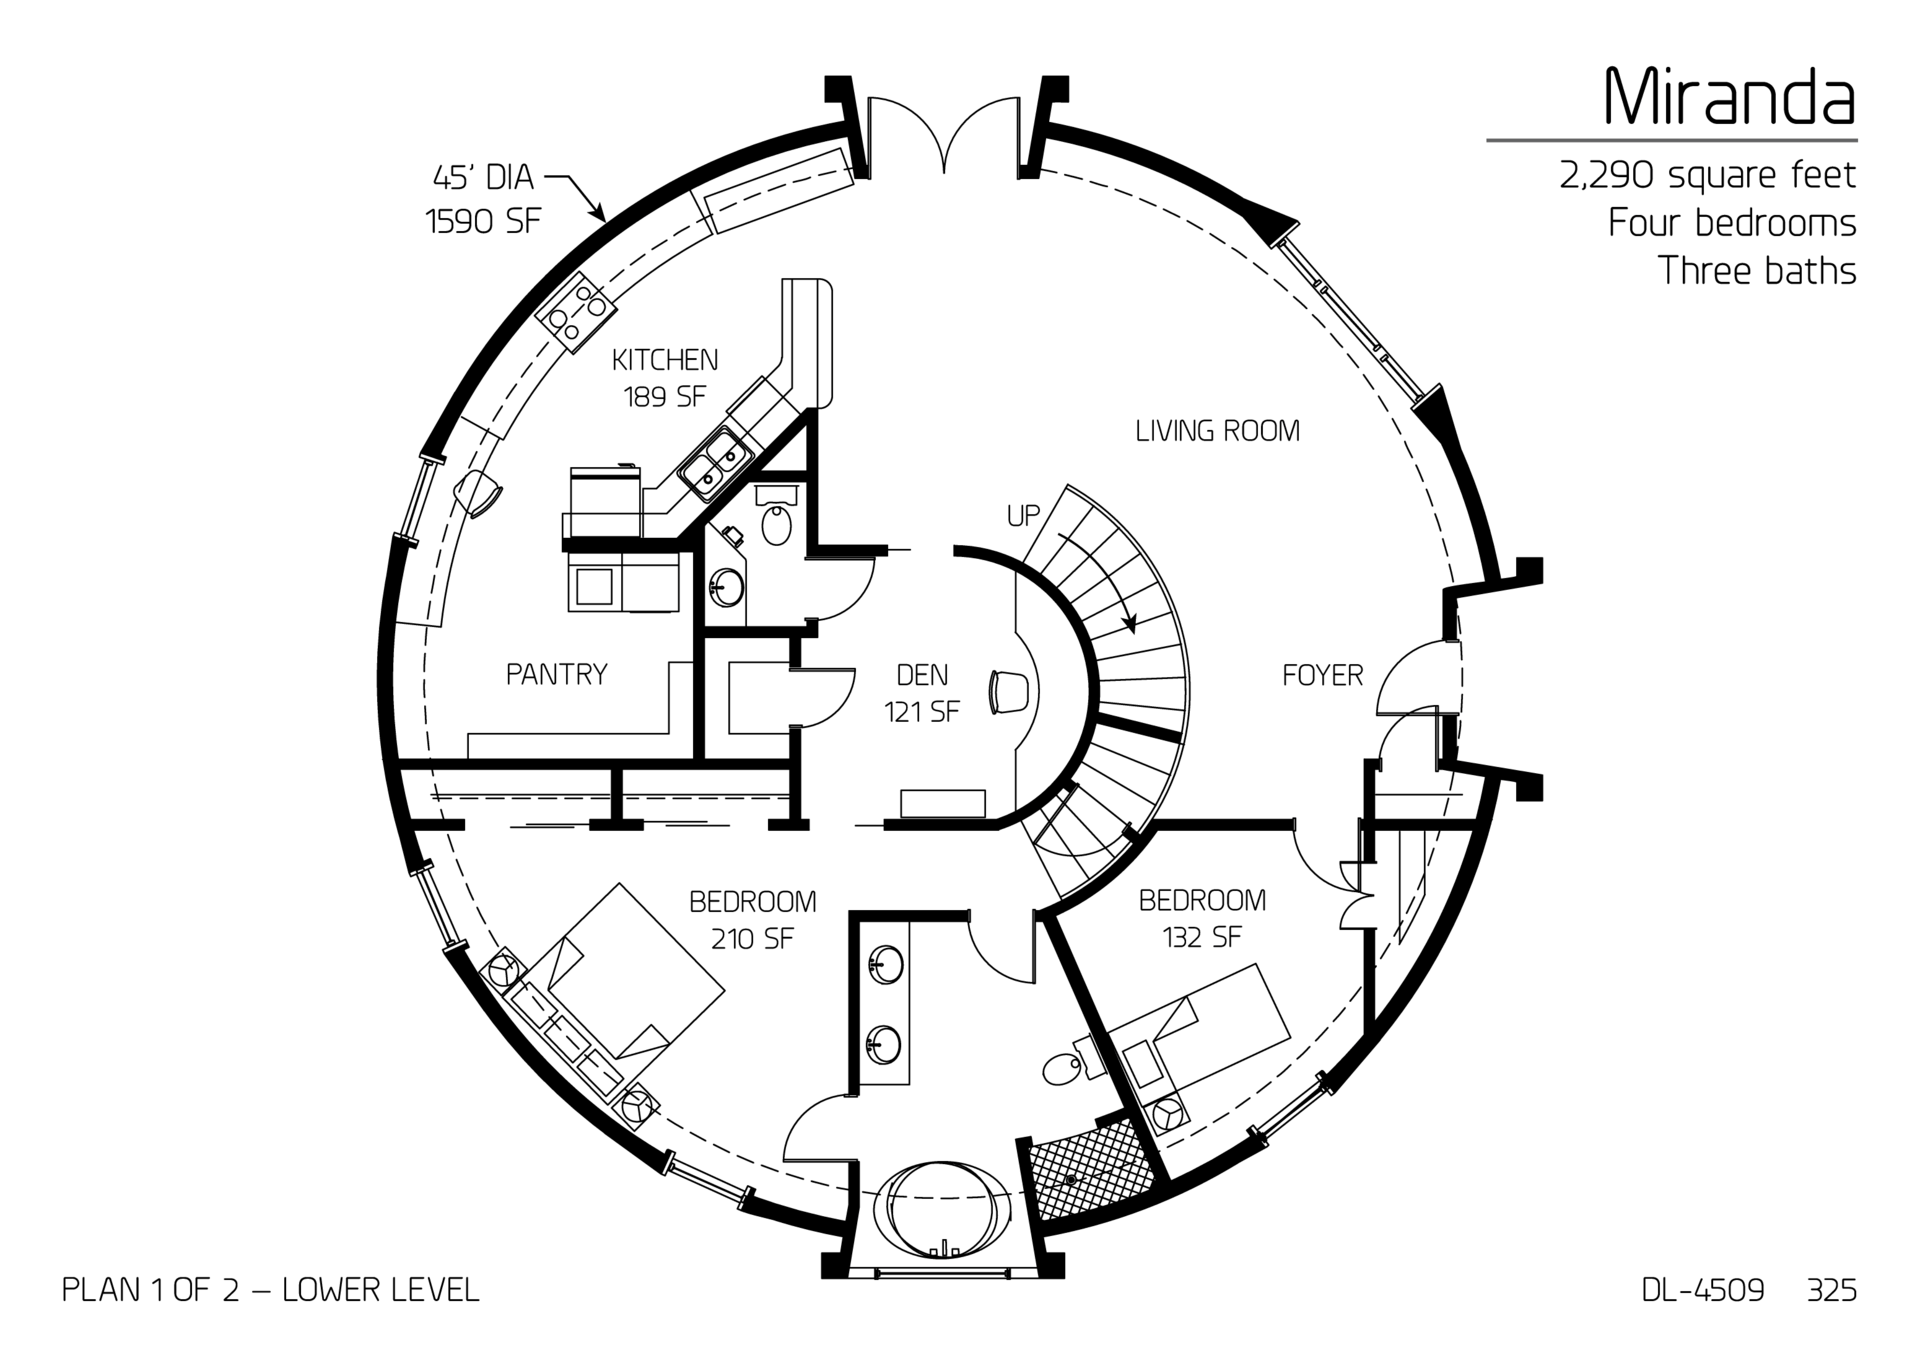 Miranda: Main Floor of a 45' Diameter, 2,290 SF, Four-Bedroom, Three-Bath Floor Plan.